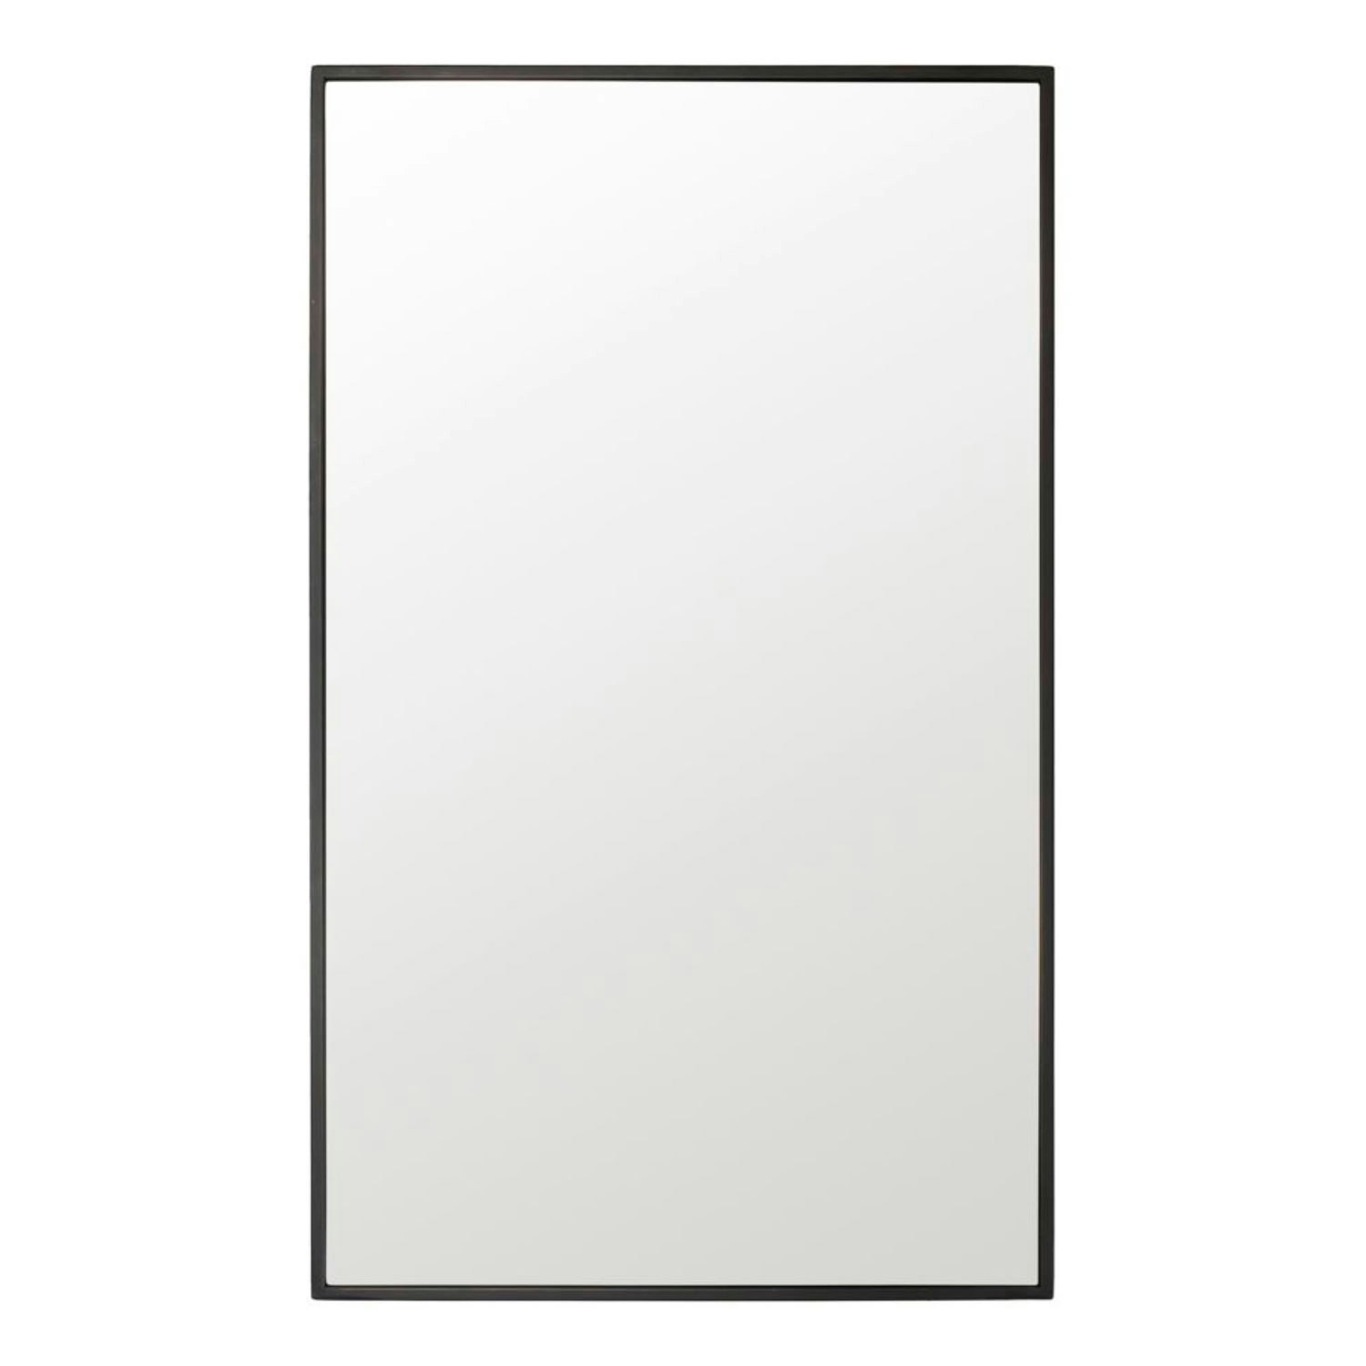 Graahoe Wall Mirror, 60x100 cm